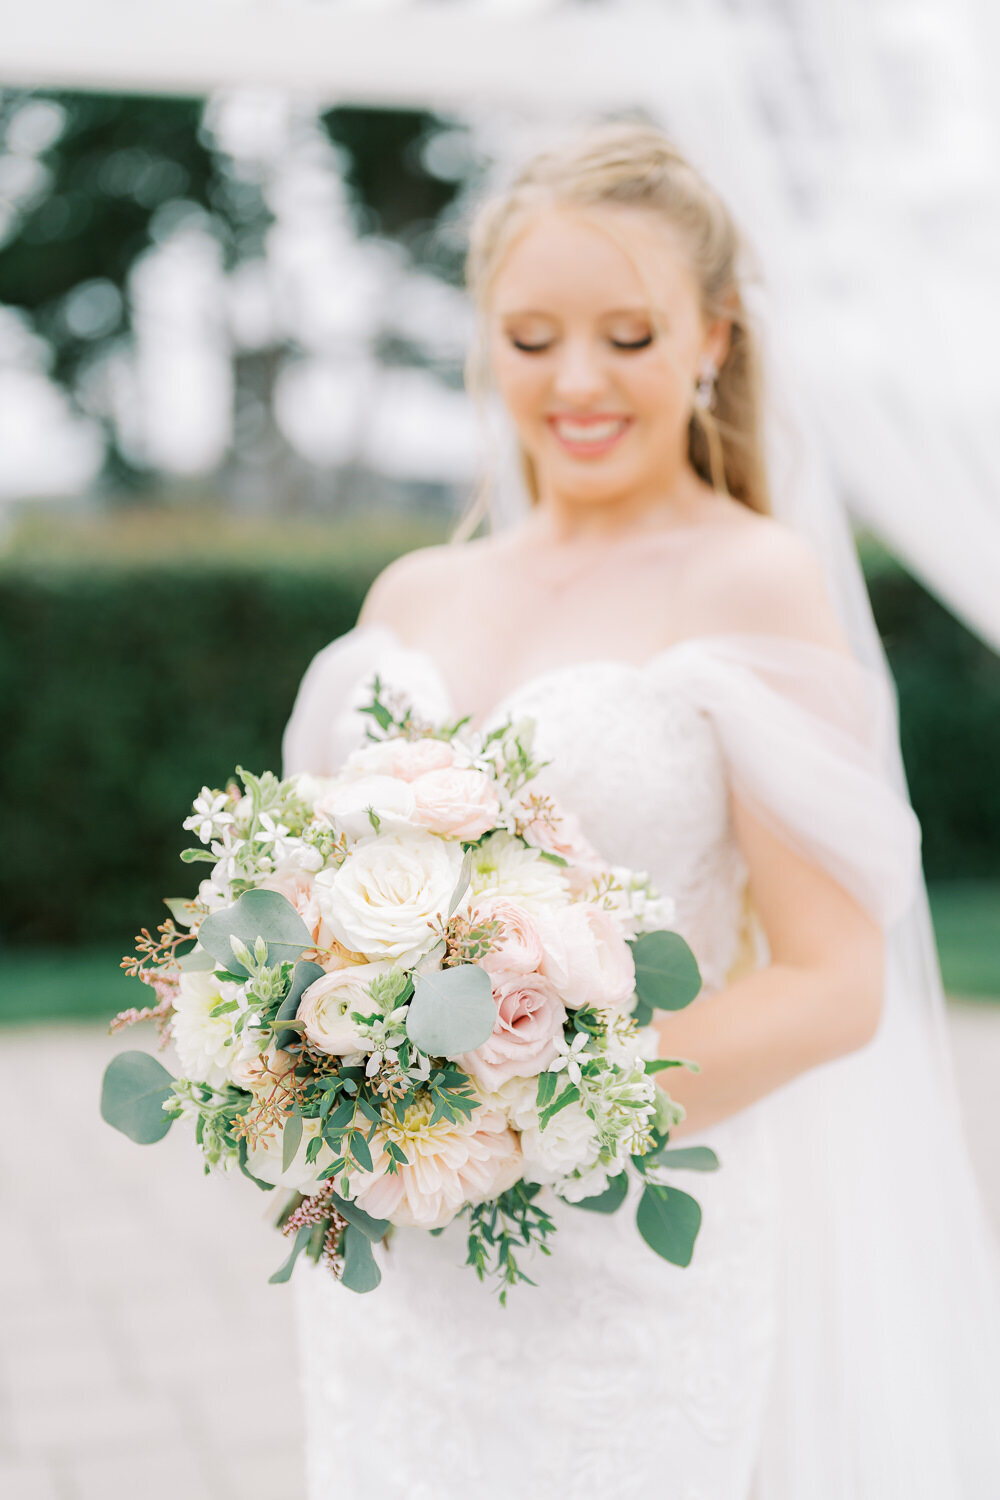 beautiful photo of a brides bouquet